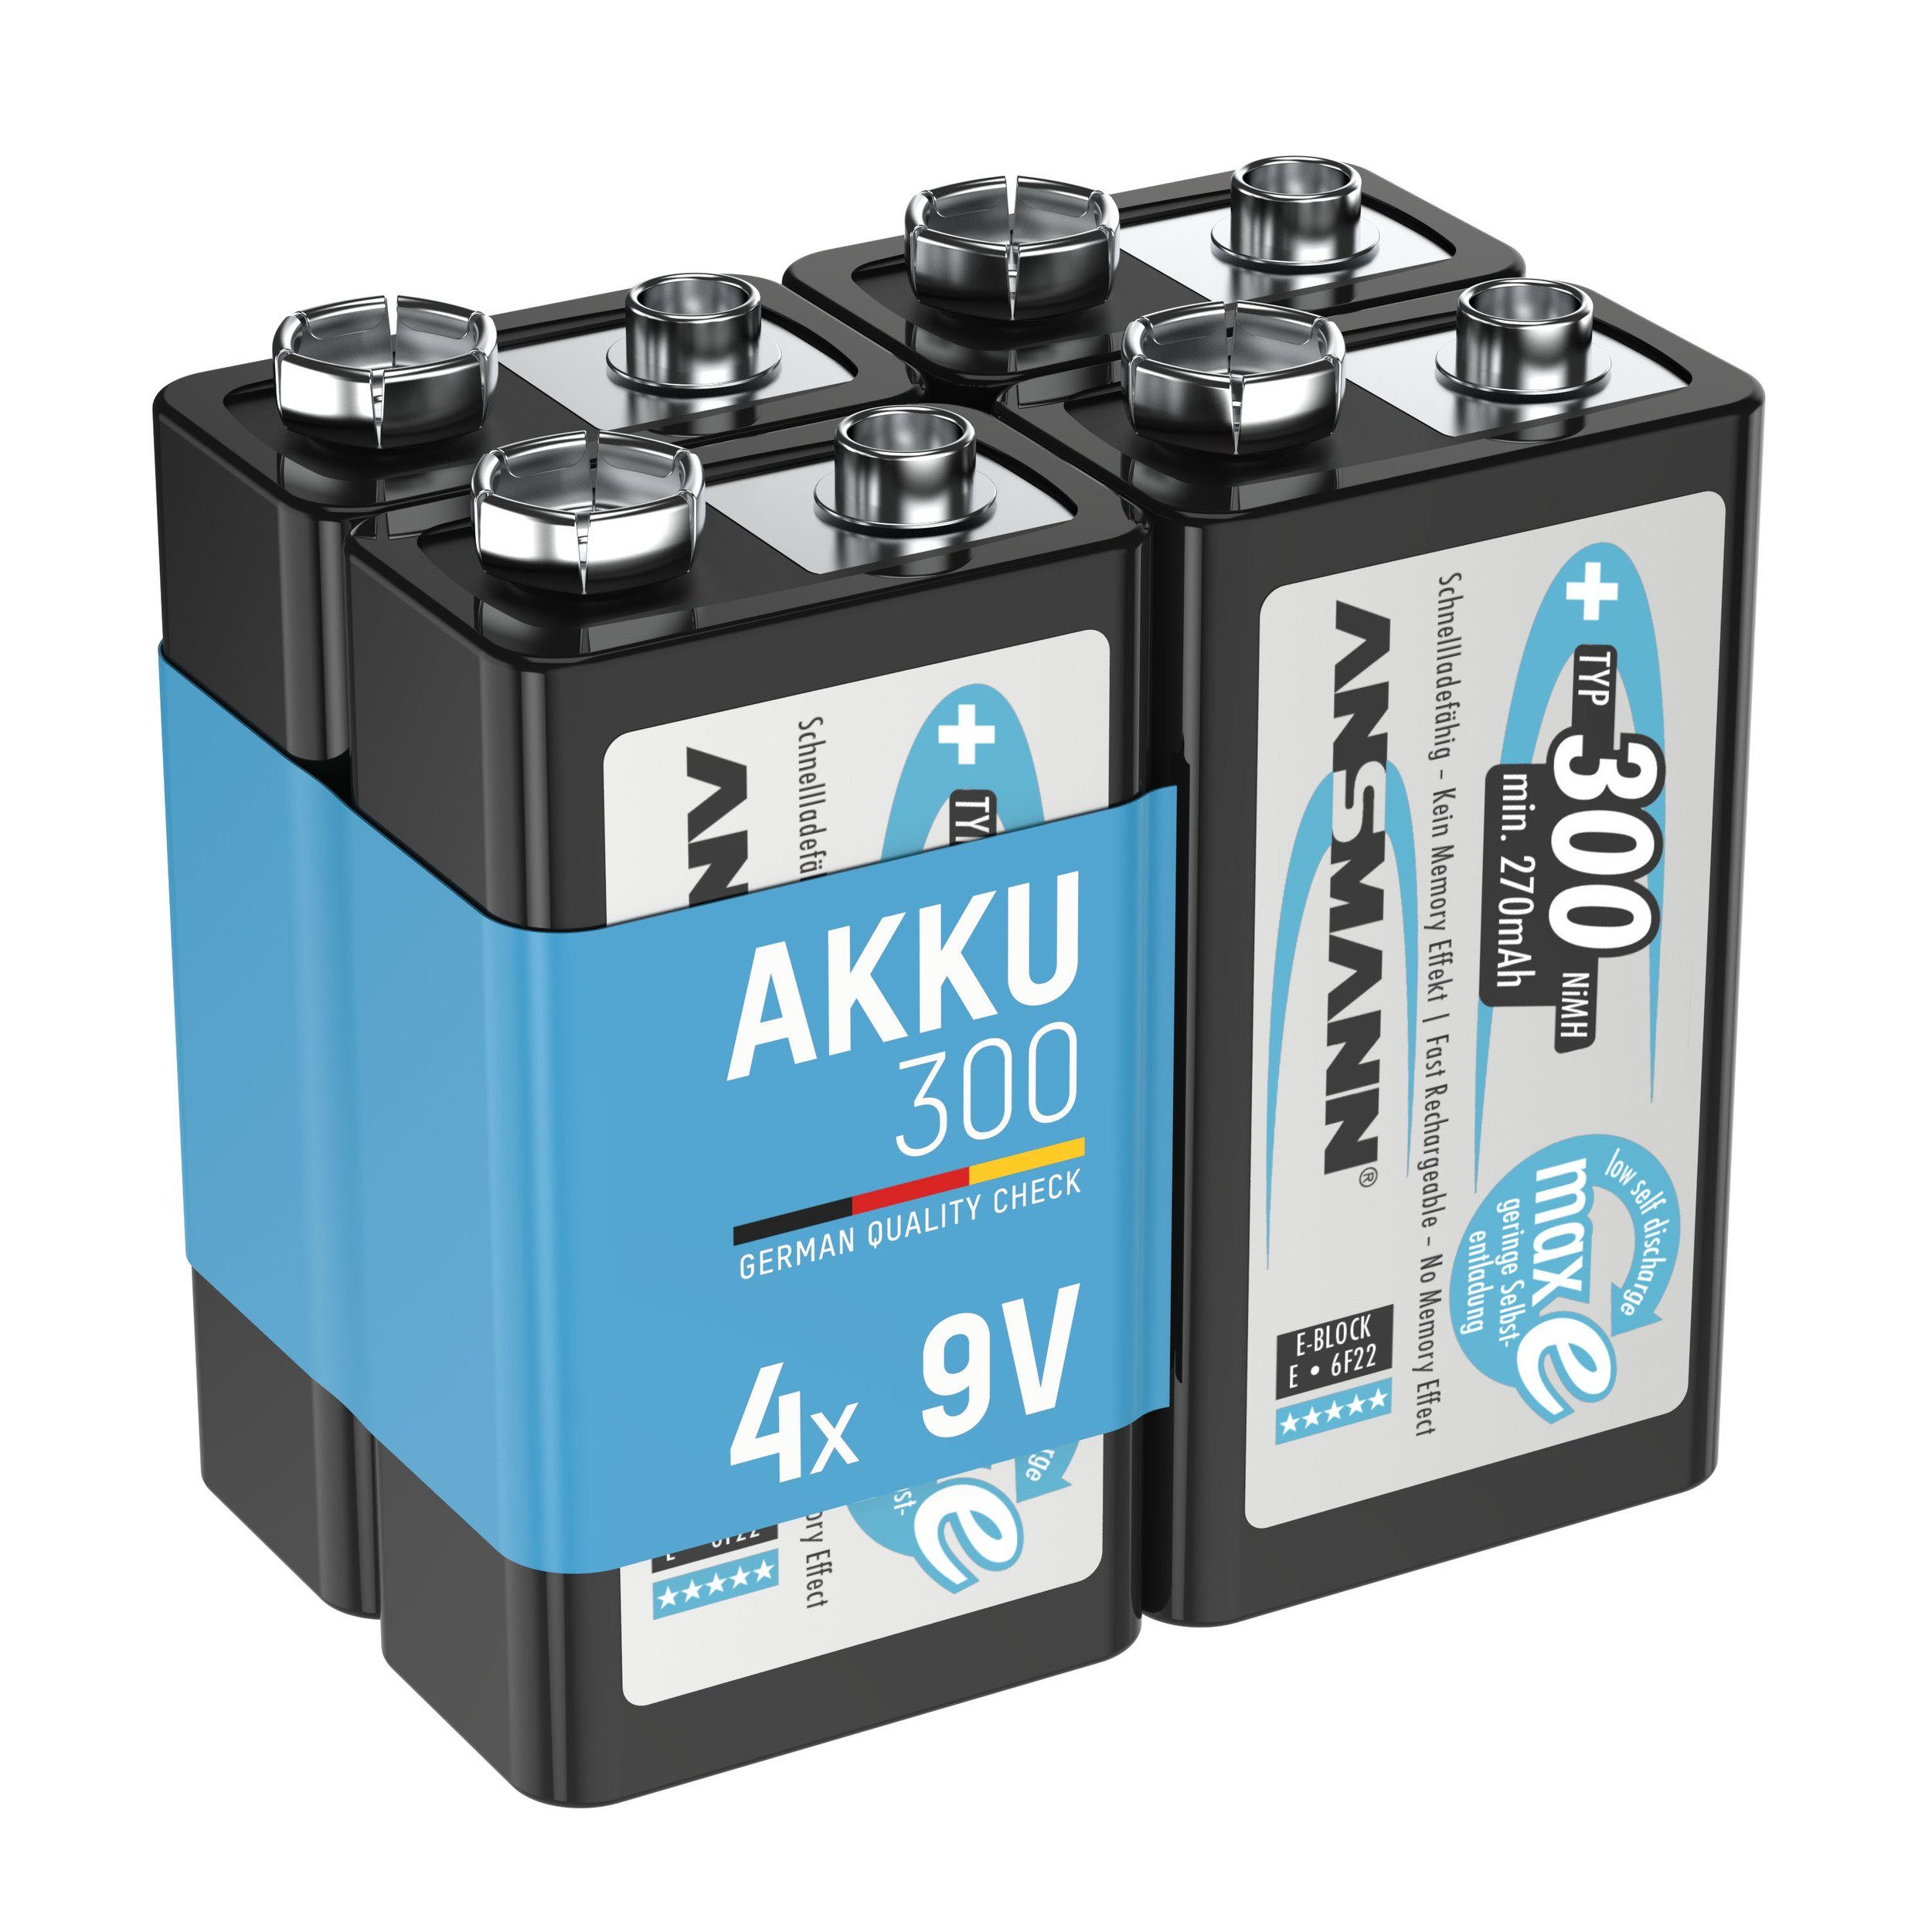 ANSMANN® Akku 9V 300mAh E-Block NiMH 1,2V – 1000x wiederaufladbar (4 Stück) Akku 300 mAh (8.4 V) | Akkus und PowerBanks